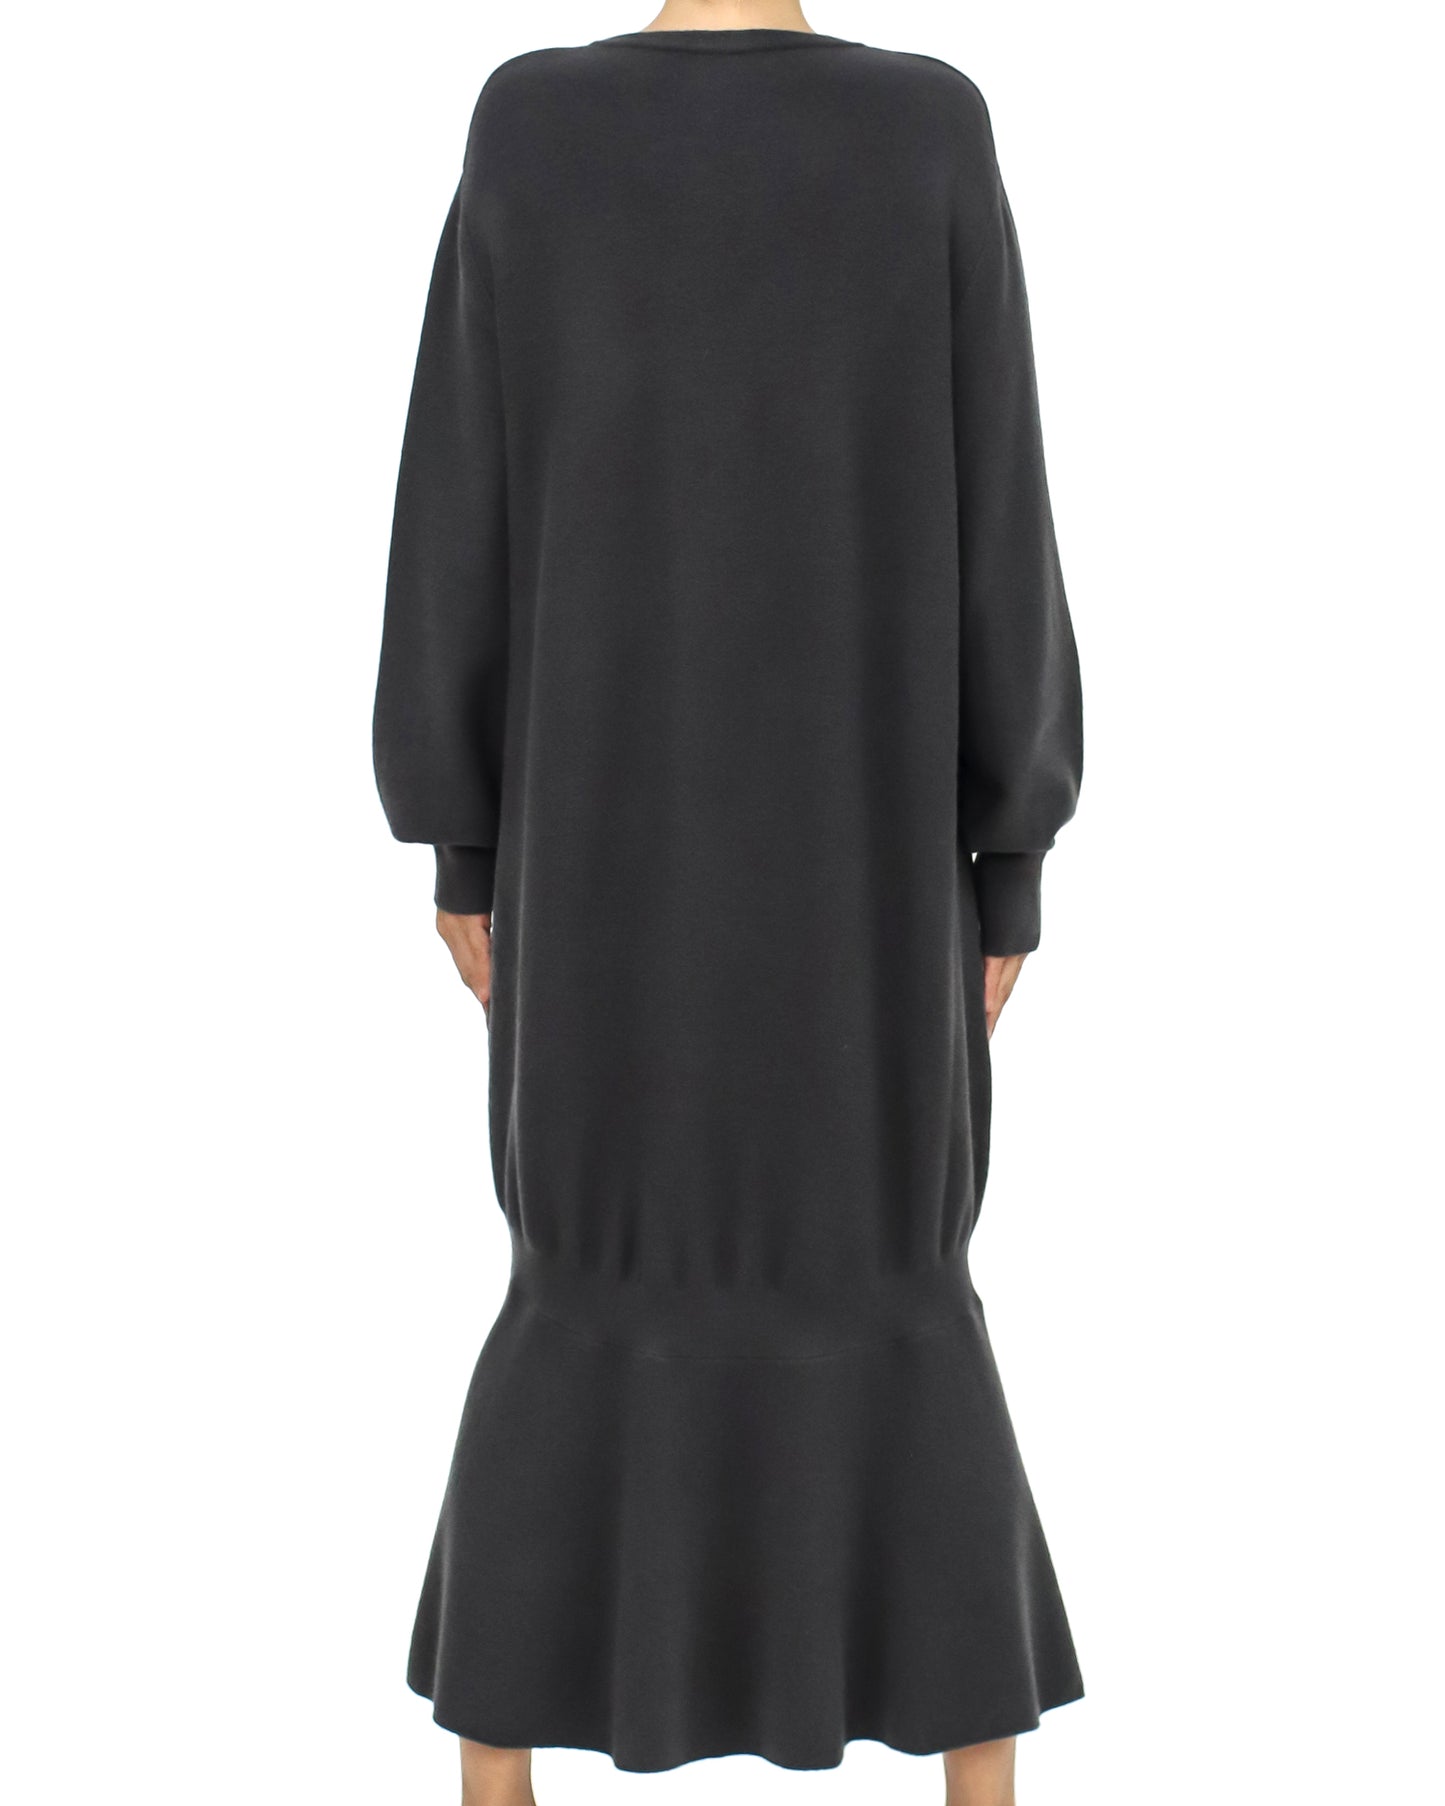 dark grey flare knitted dress *pre-order*